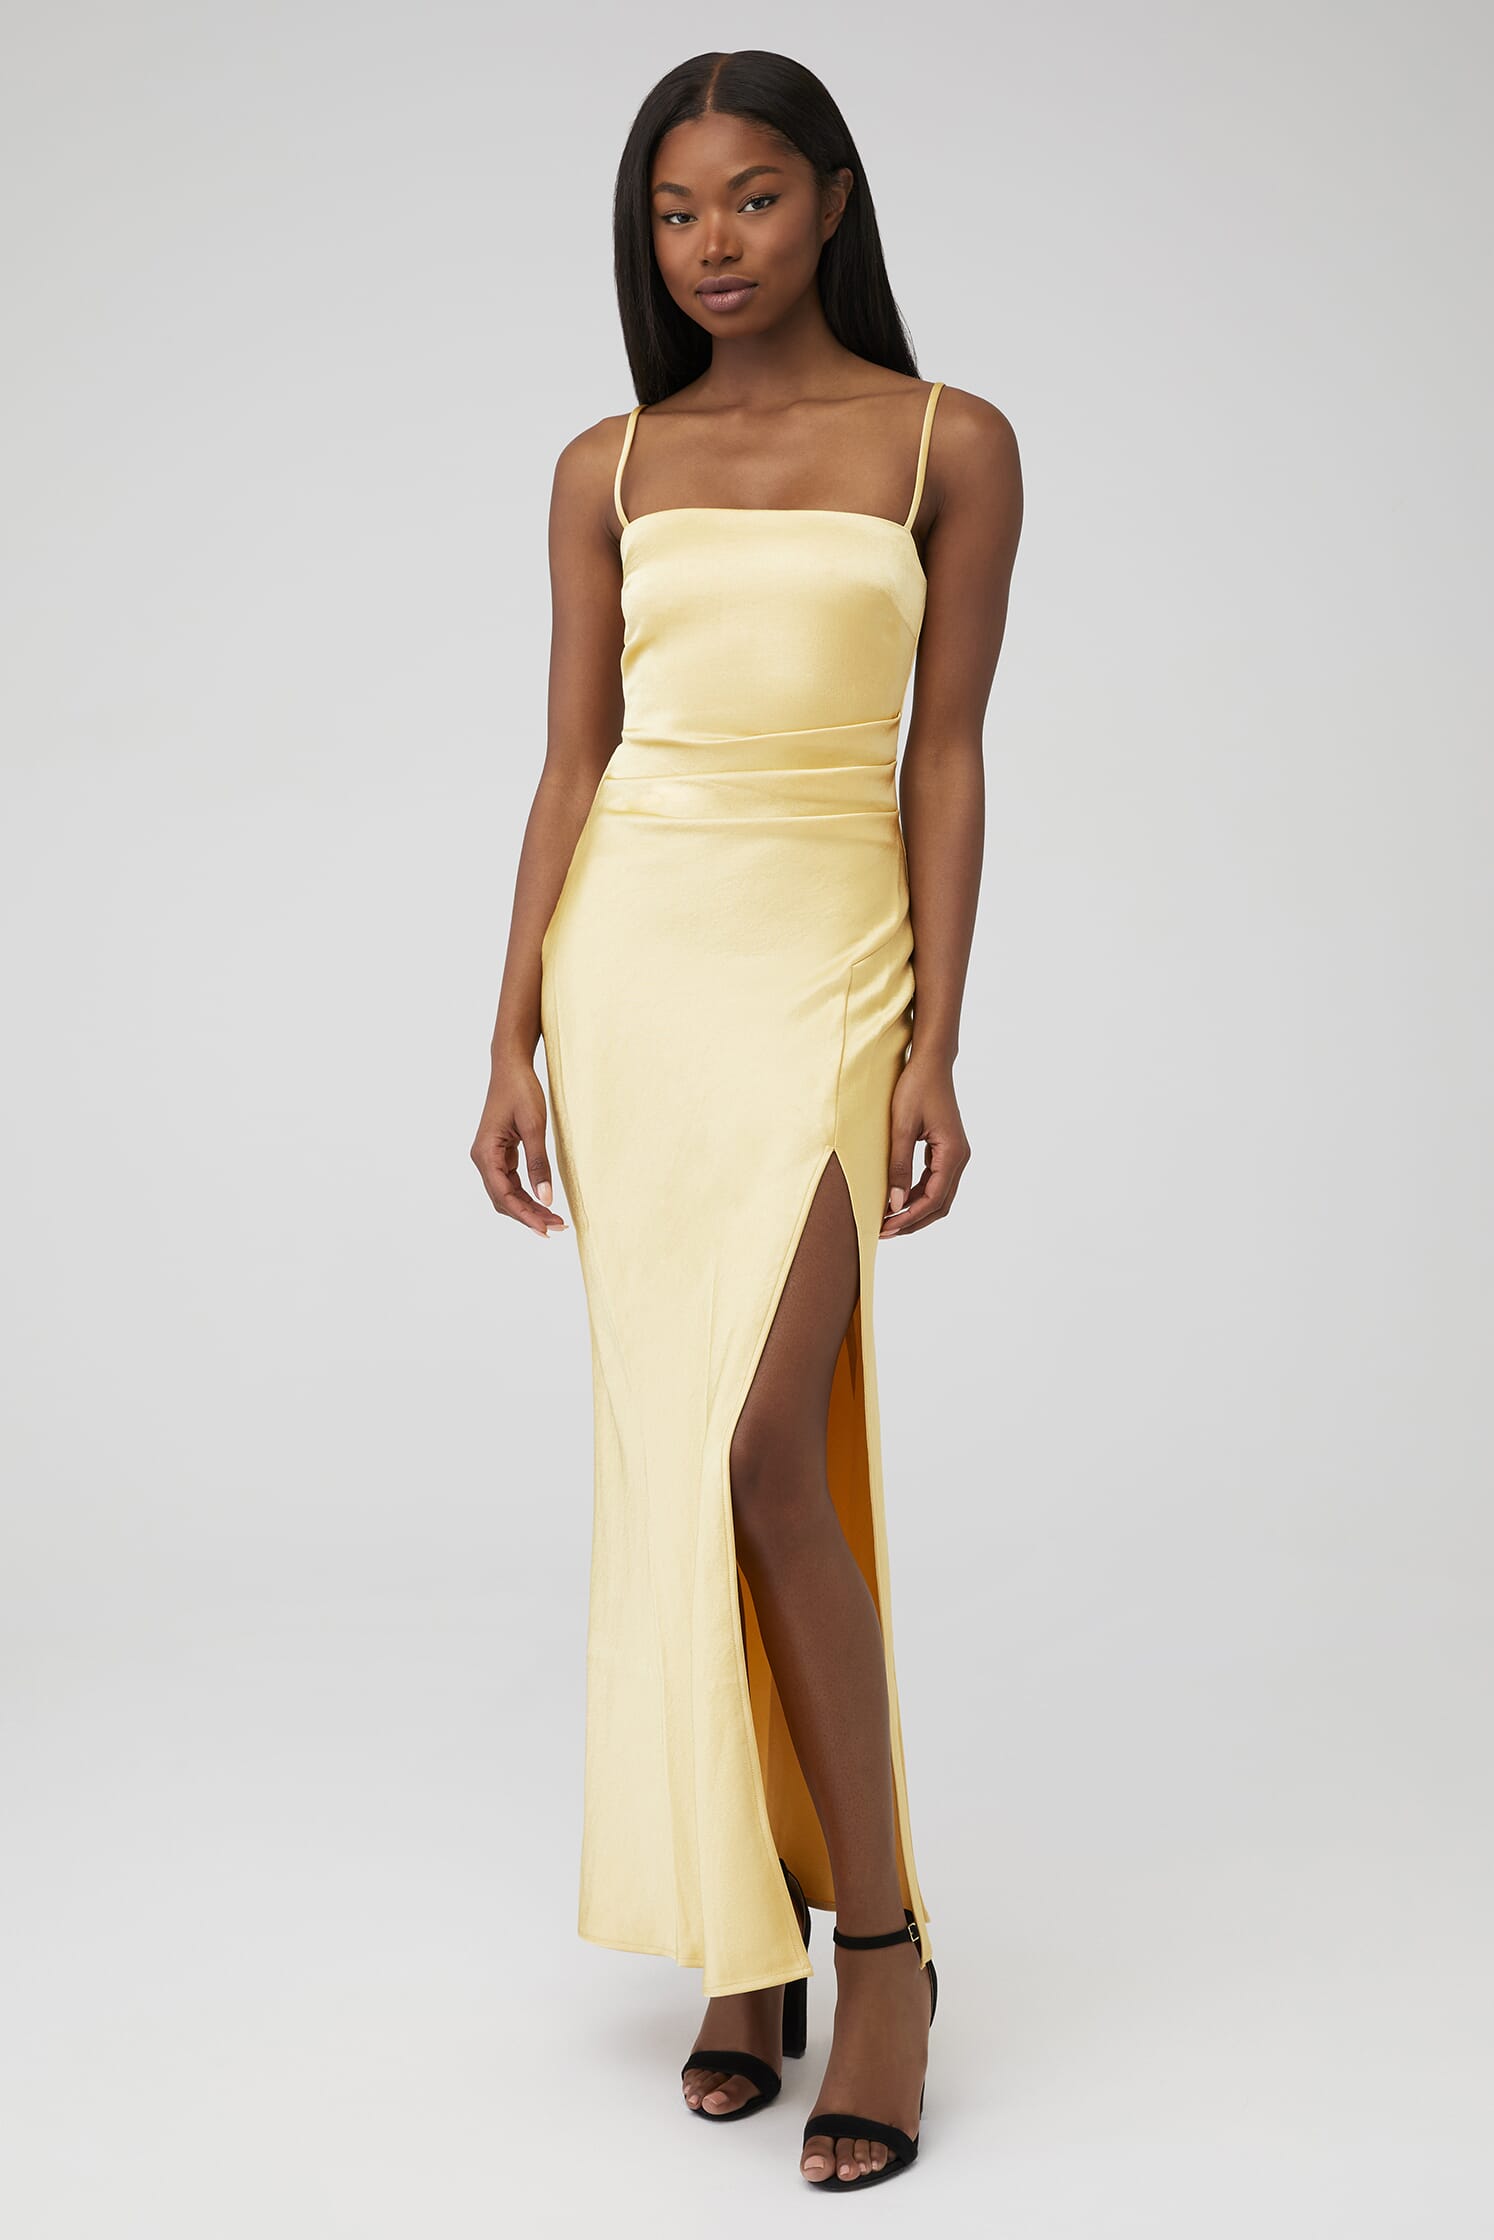 BEC + BRIDGE | Nadia Maxi Dress in Straw| FashionPass